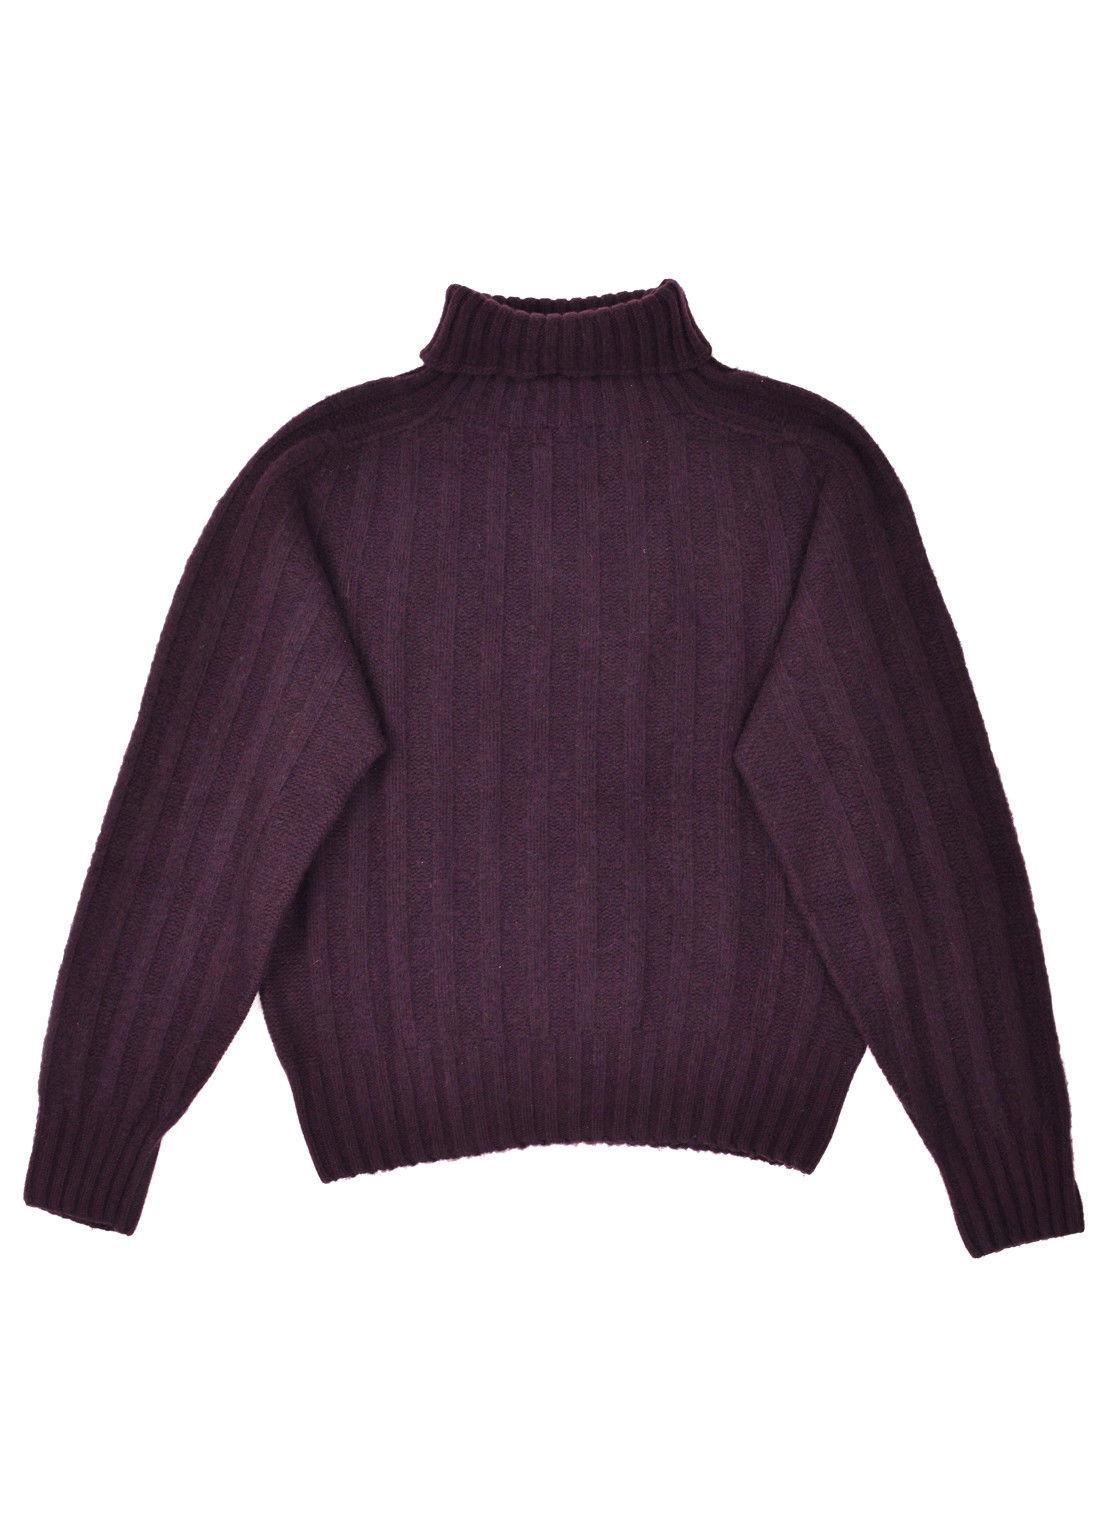 Black Tom Ford Mens Cashmere Maroon Rib Knit Turtleneck Sweater Sz IT46/US36~RTL $1450 For Sale